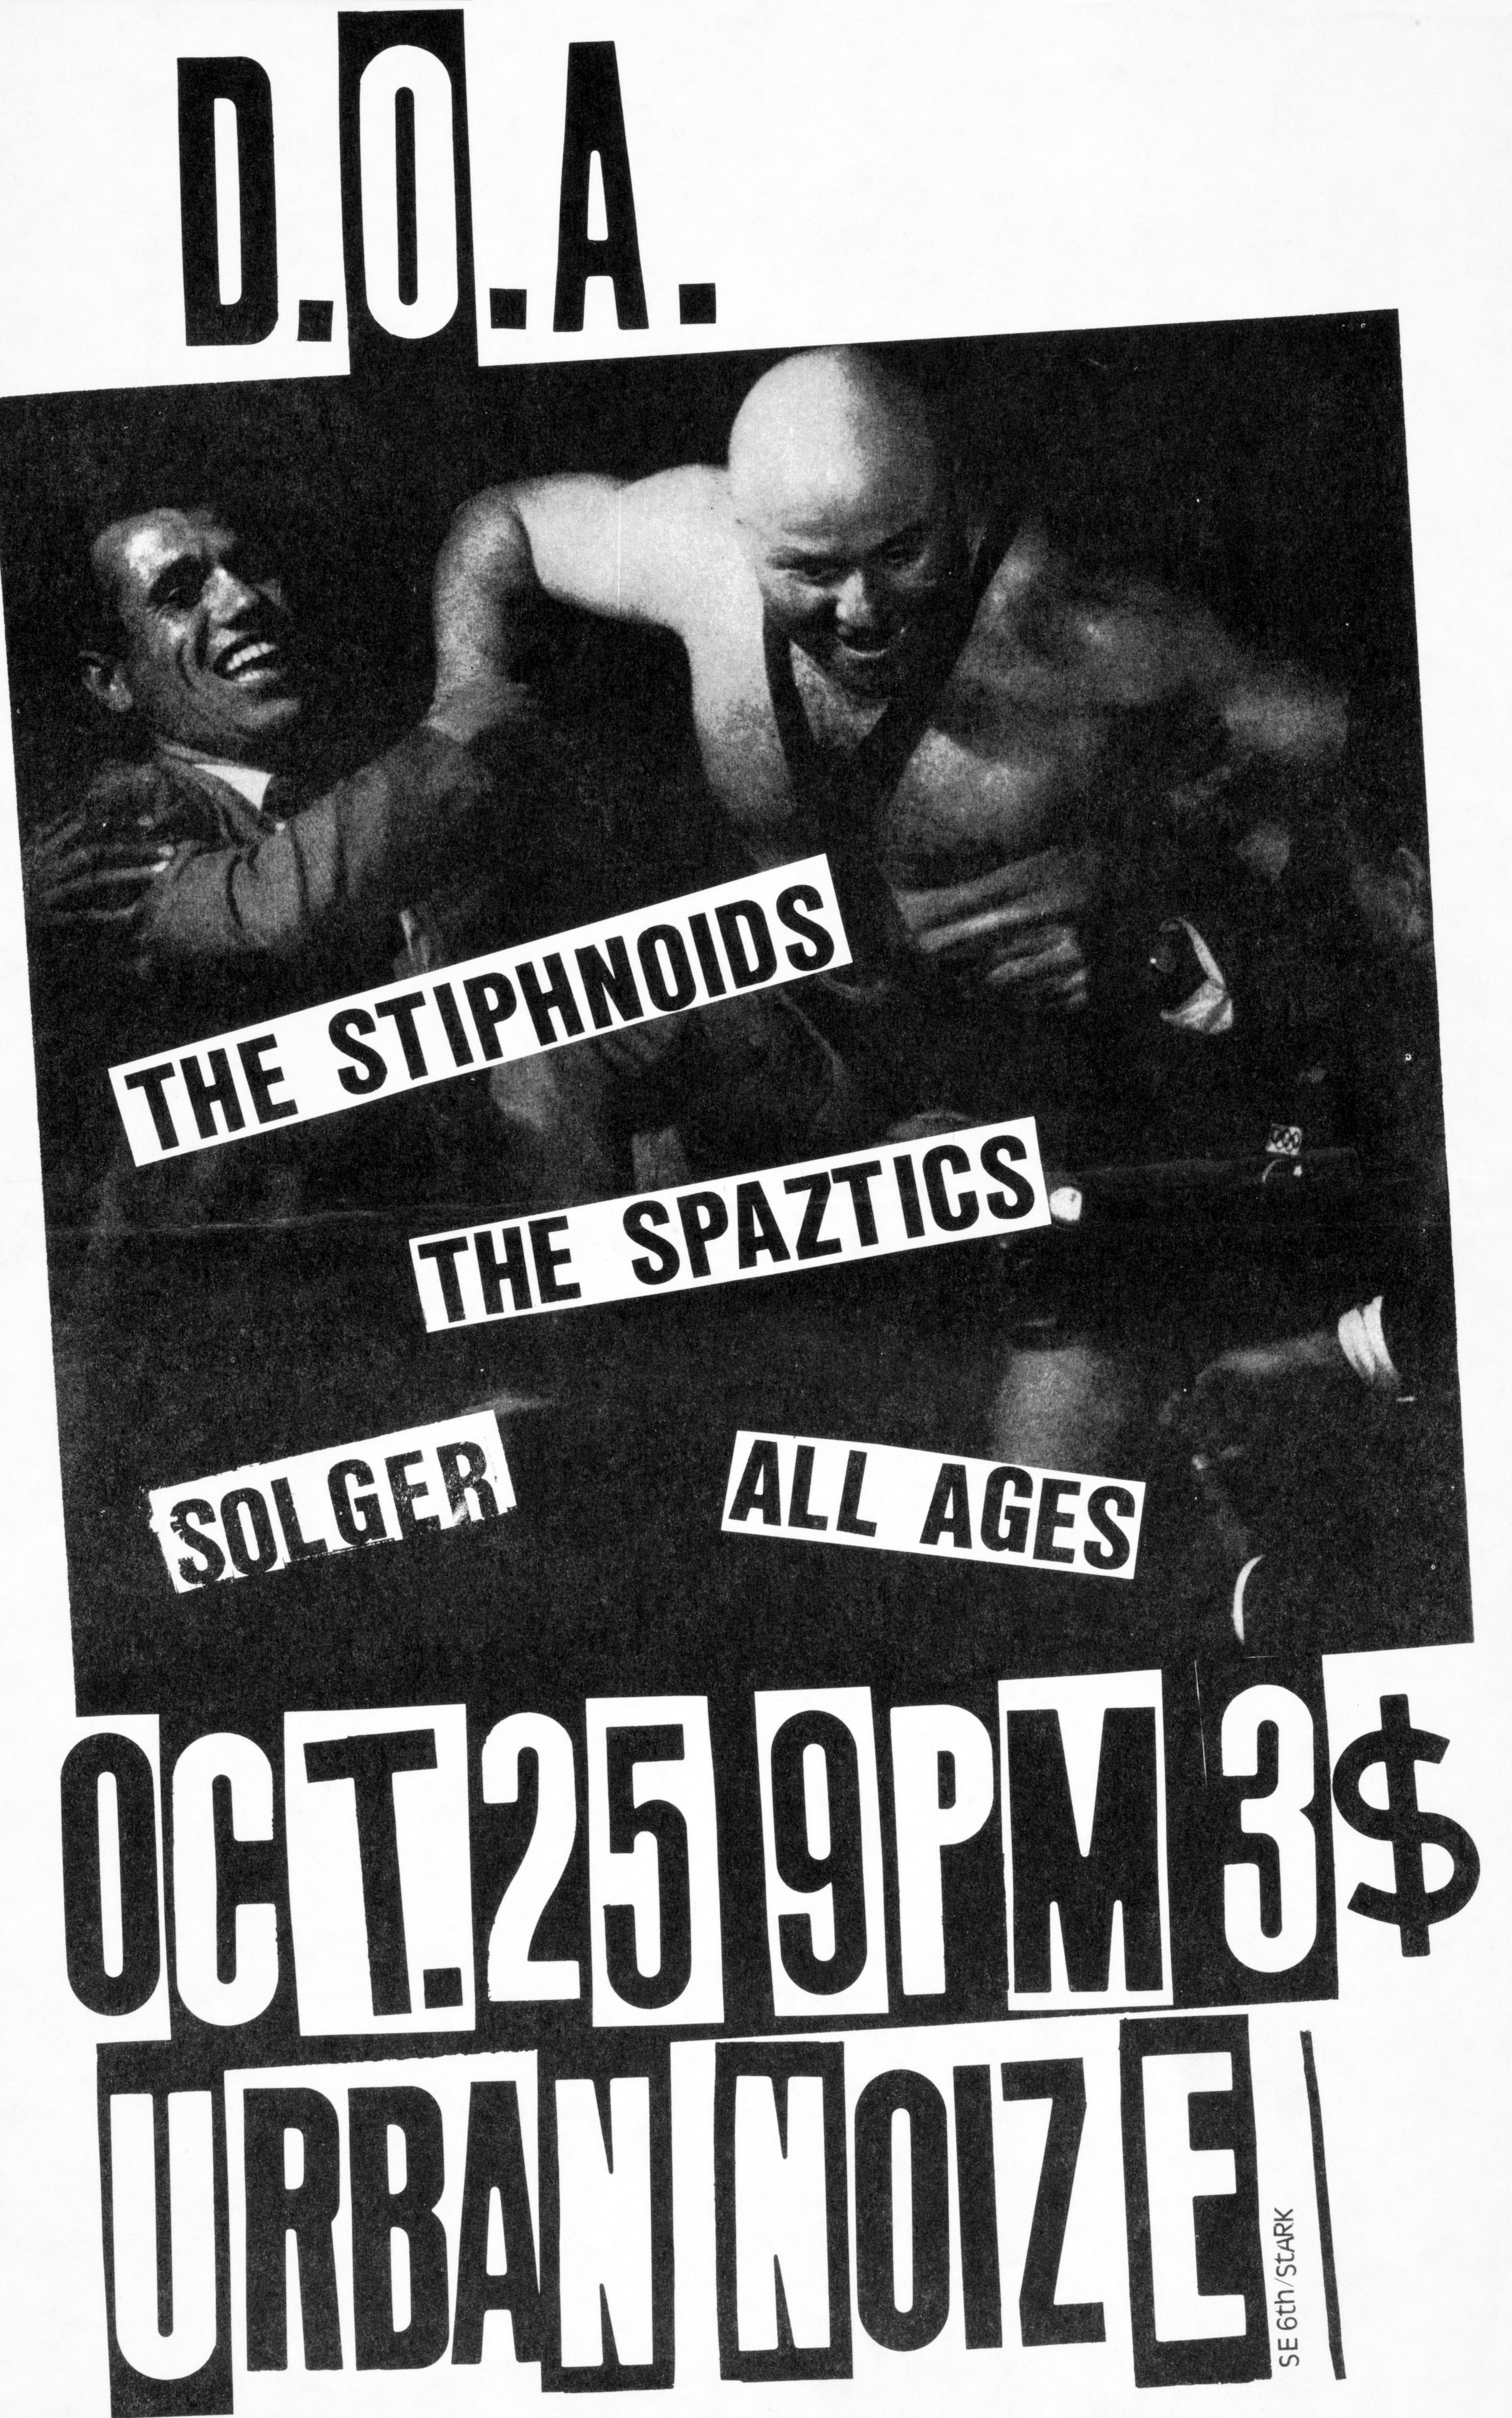 MXP-47.1 DOA 1980 Urban Noize  Oct 25 Concert Poster